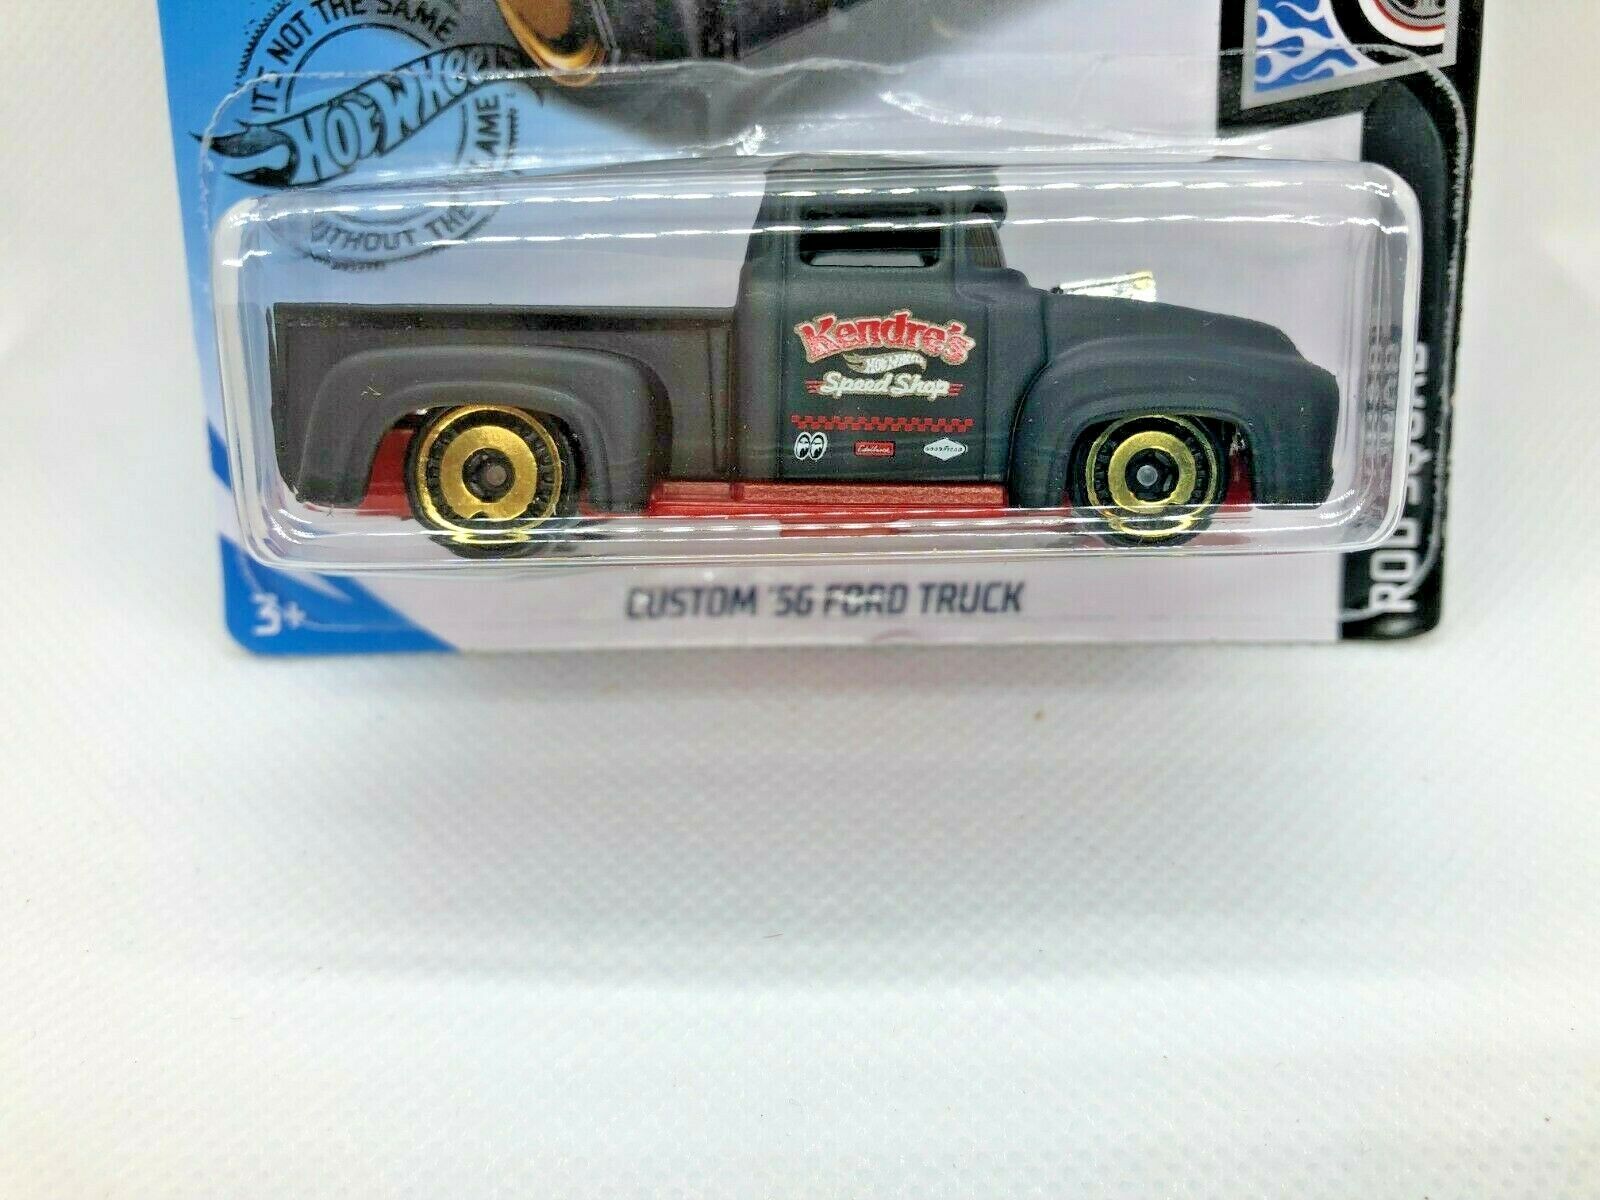 Custom 56 Ford Truck